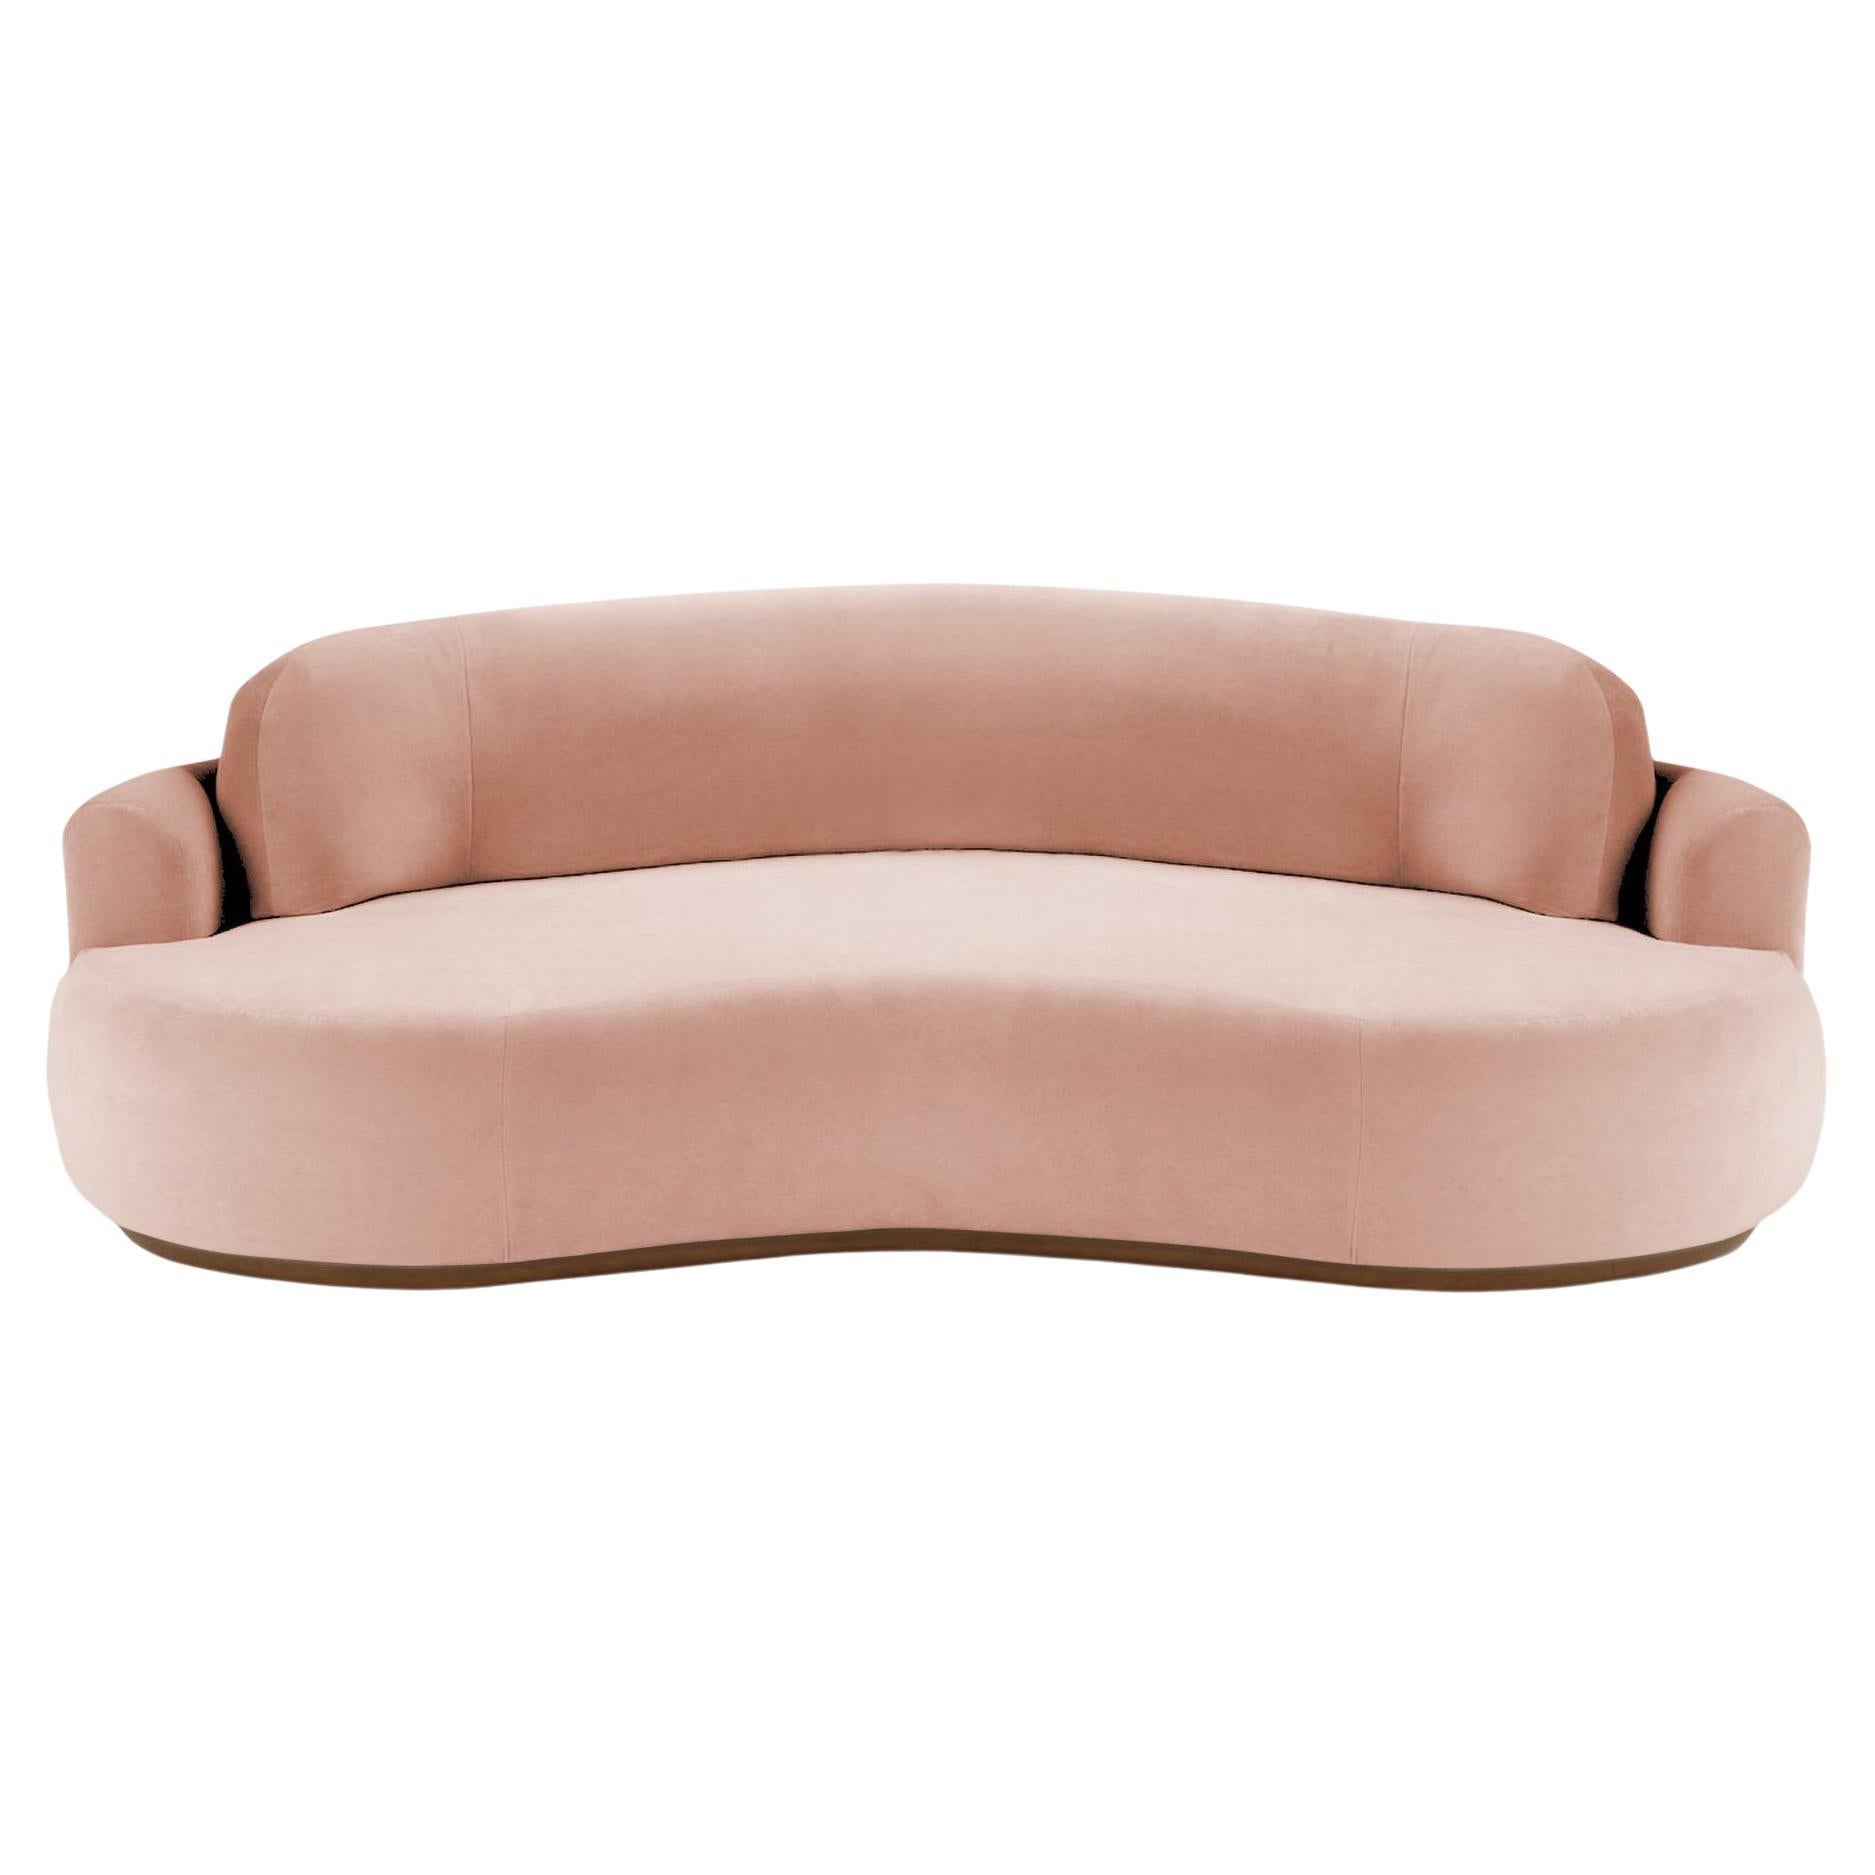 Naked Curved Sofa, Medium with Beech Ash-056-1 and Vigo Blossom For Sale